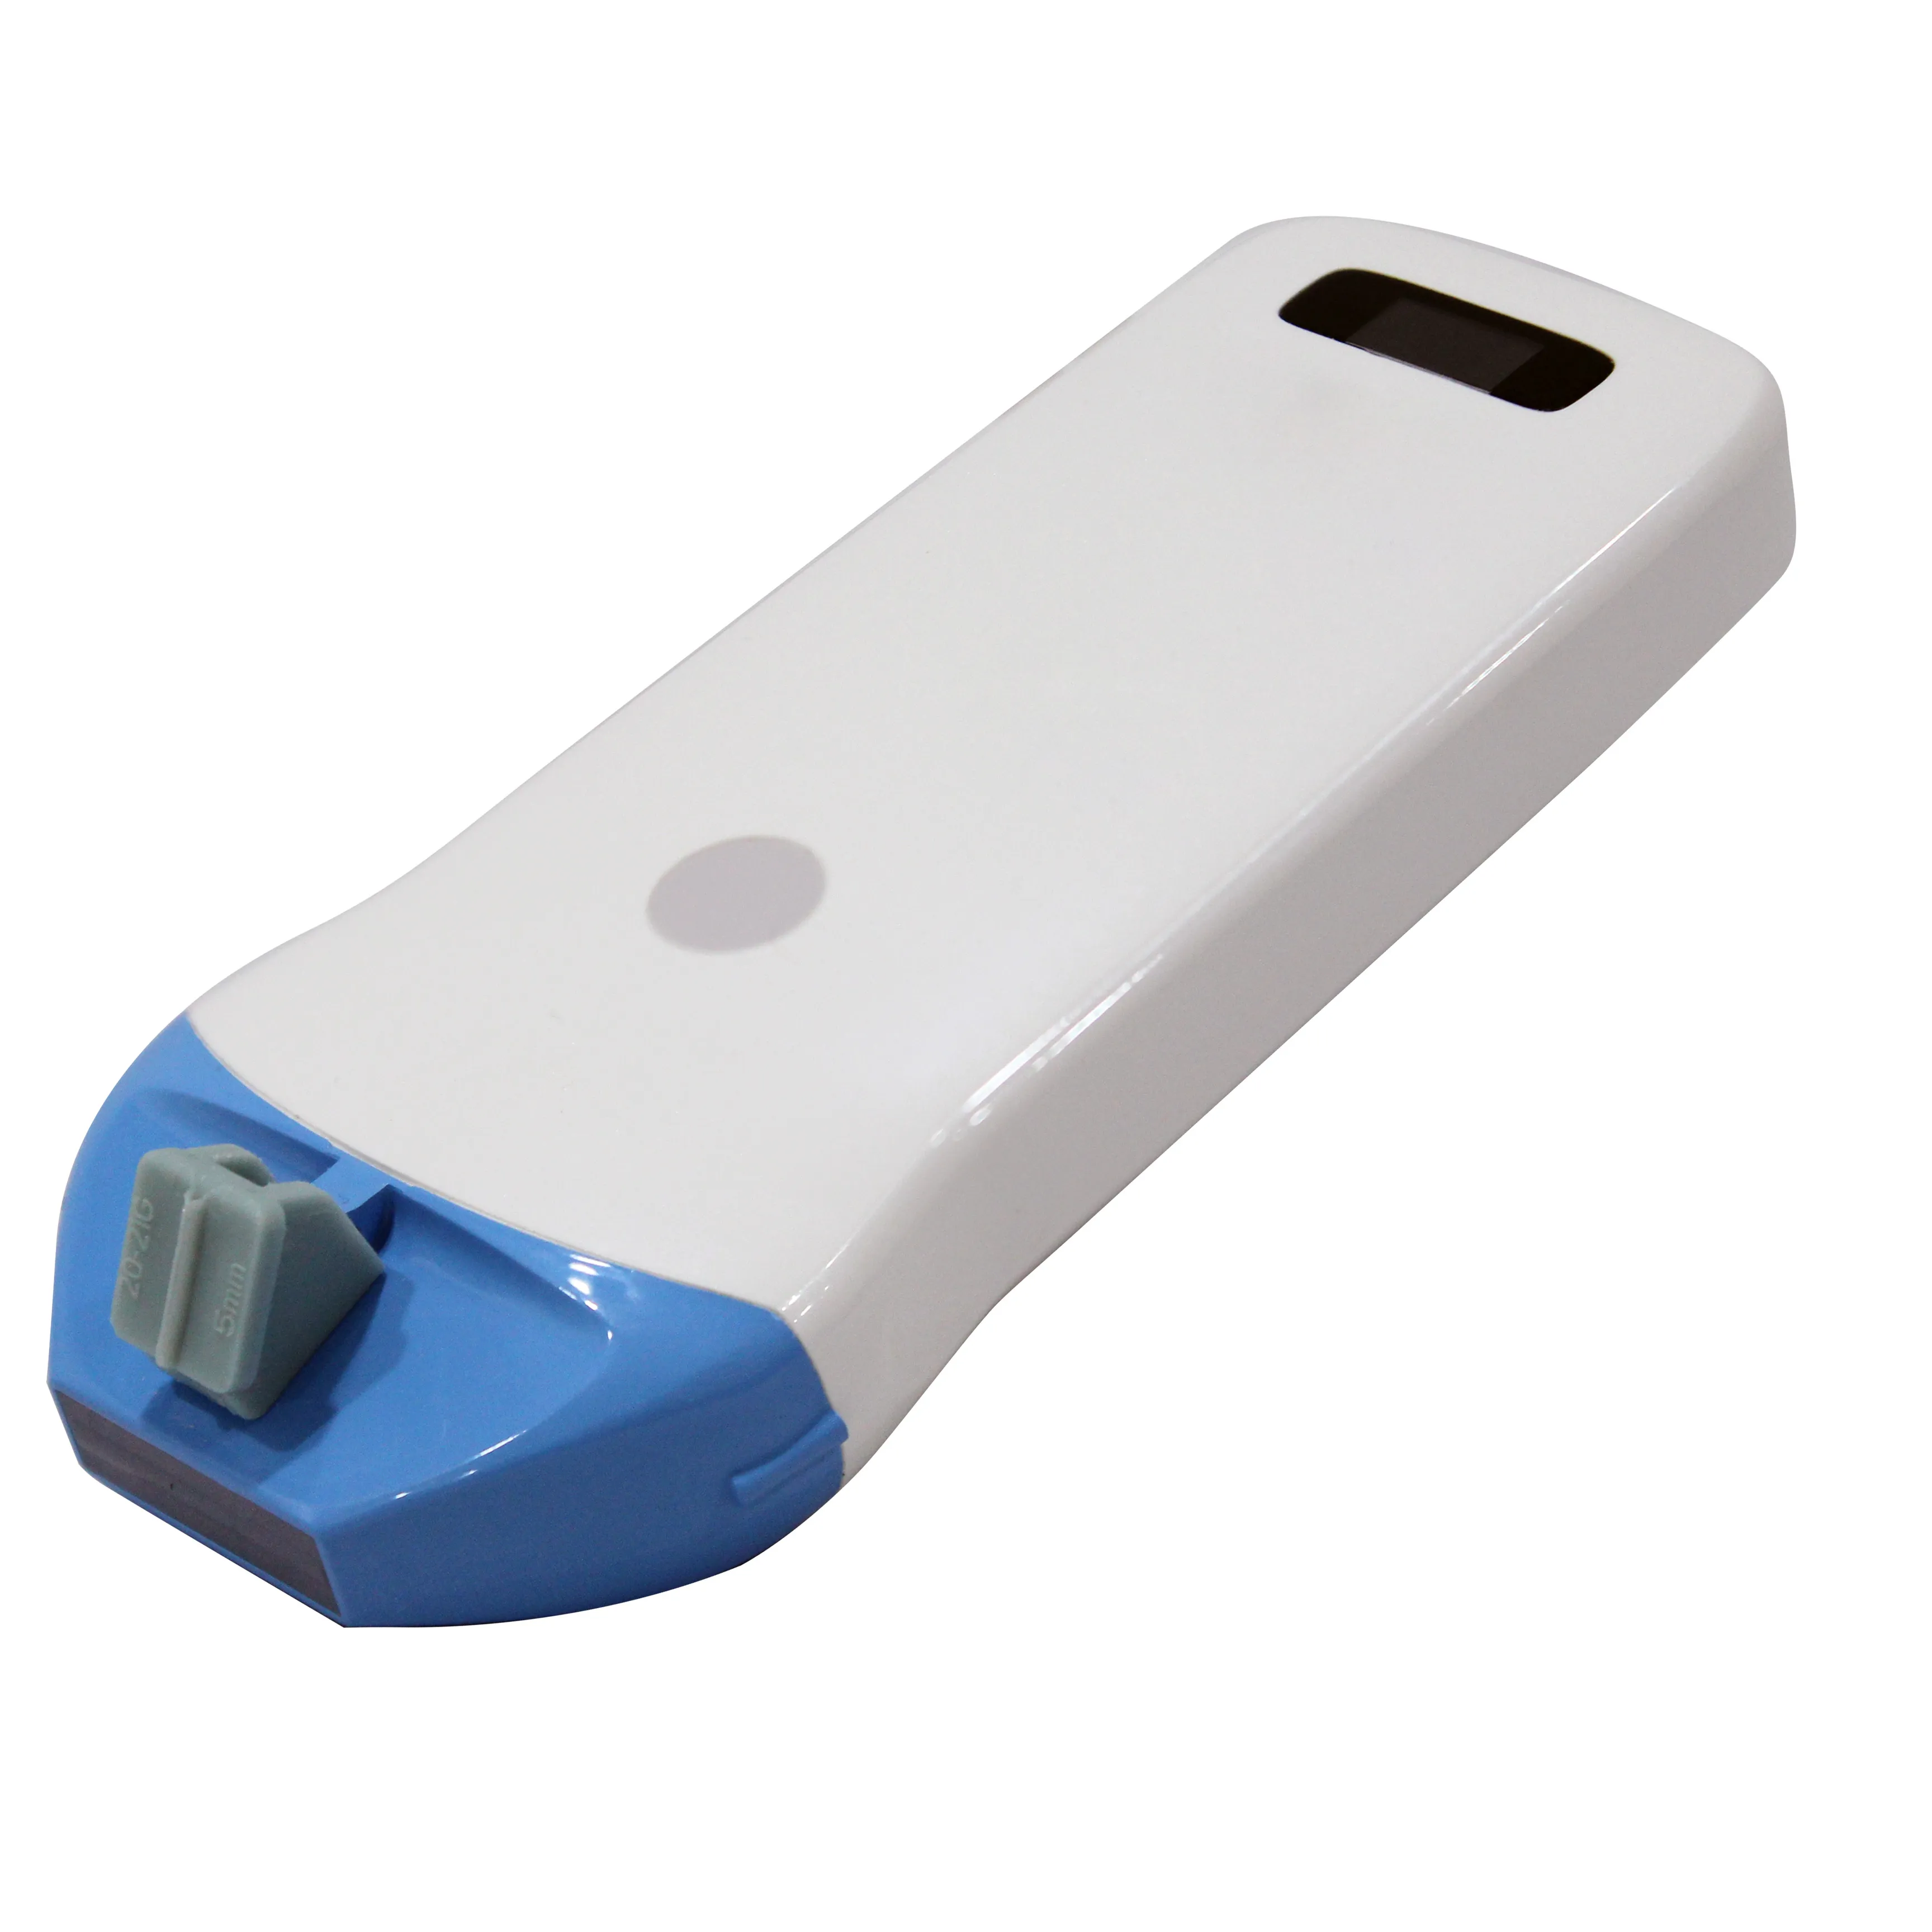 Kablosuz B/W doğrusal ultrasonik makine site rite vasküler ultrason doğrusal ultrason tarayıcı taşınabilir doğrusal prob